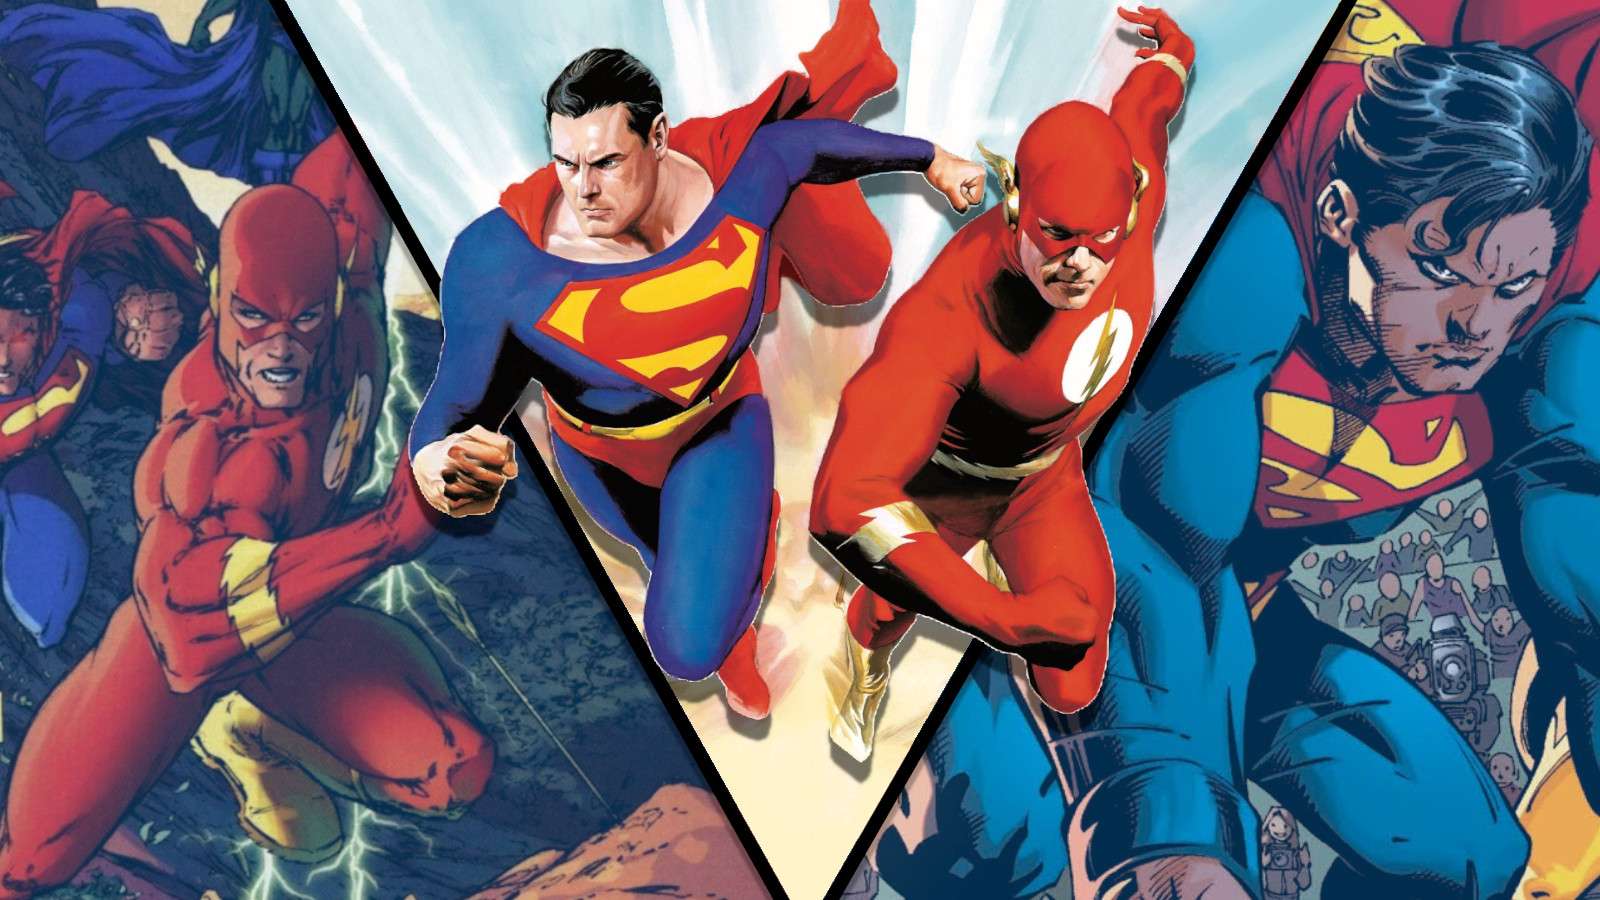 Superman races the Flash in DC Comics